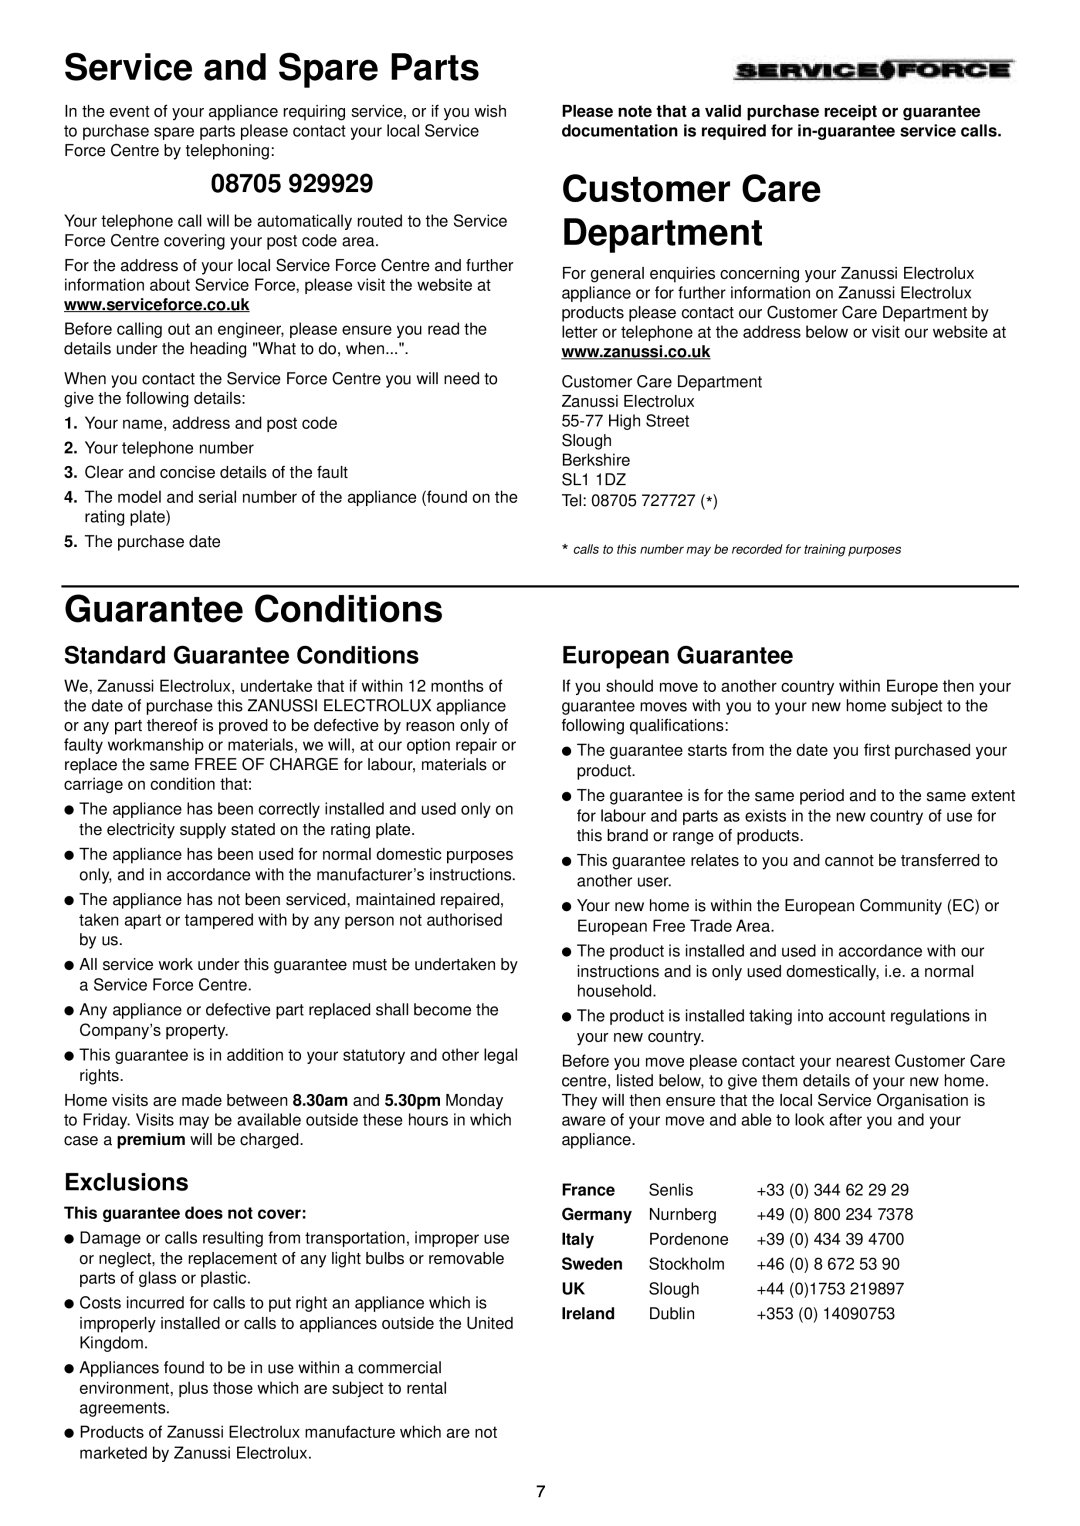 Zanussi DA 4142 manual Service and Spare Parts, Customer Care Department, Guarantee Conditions, 08705, Exclusions 